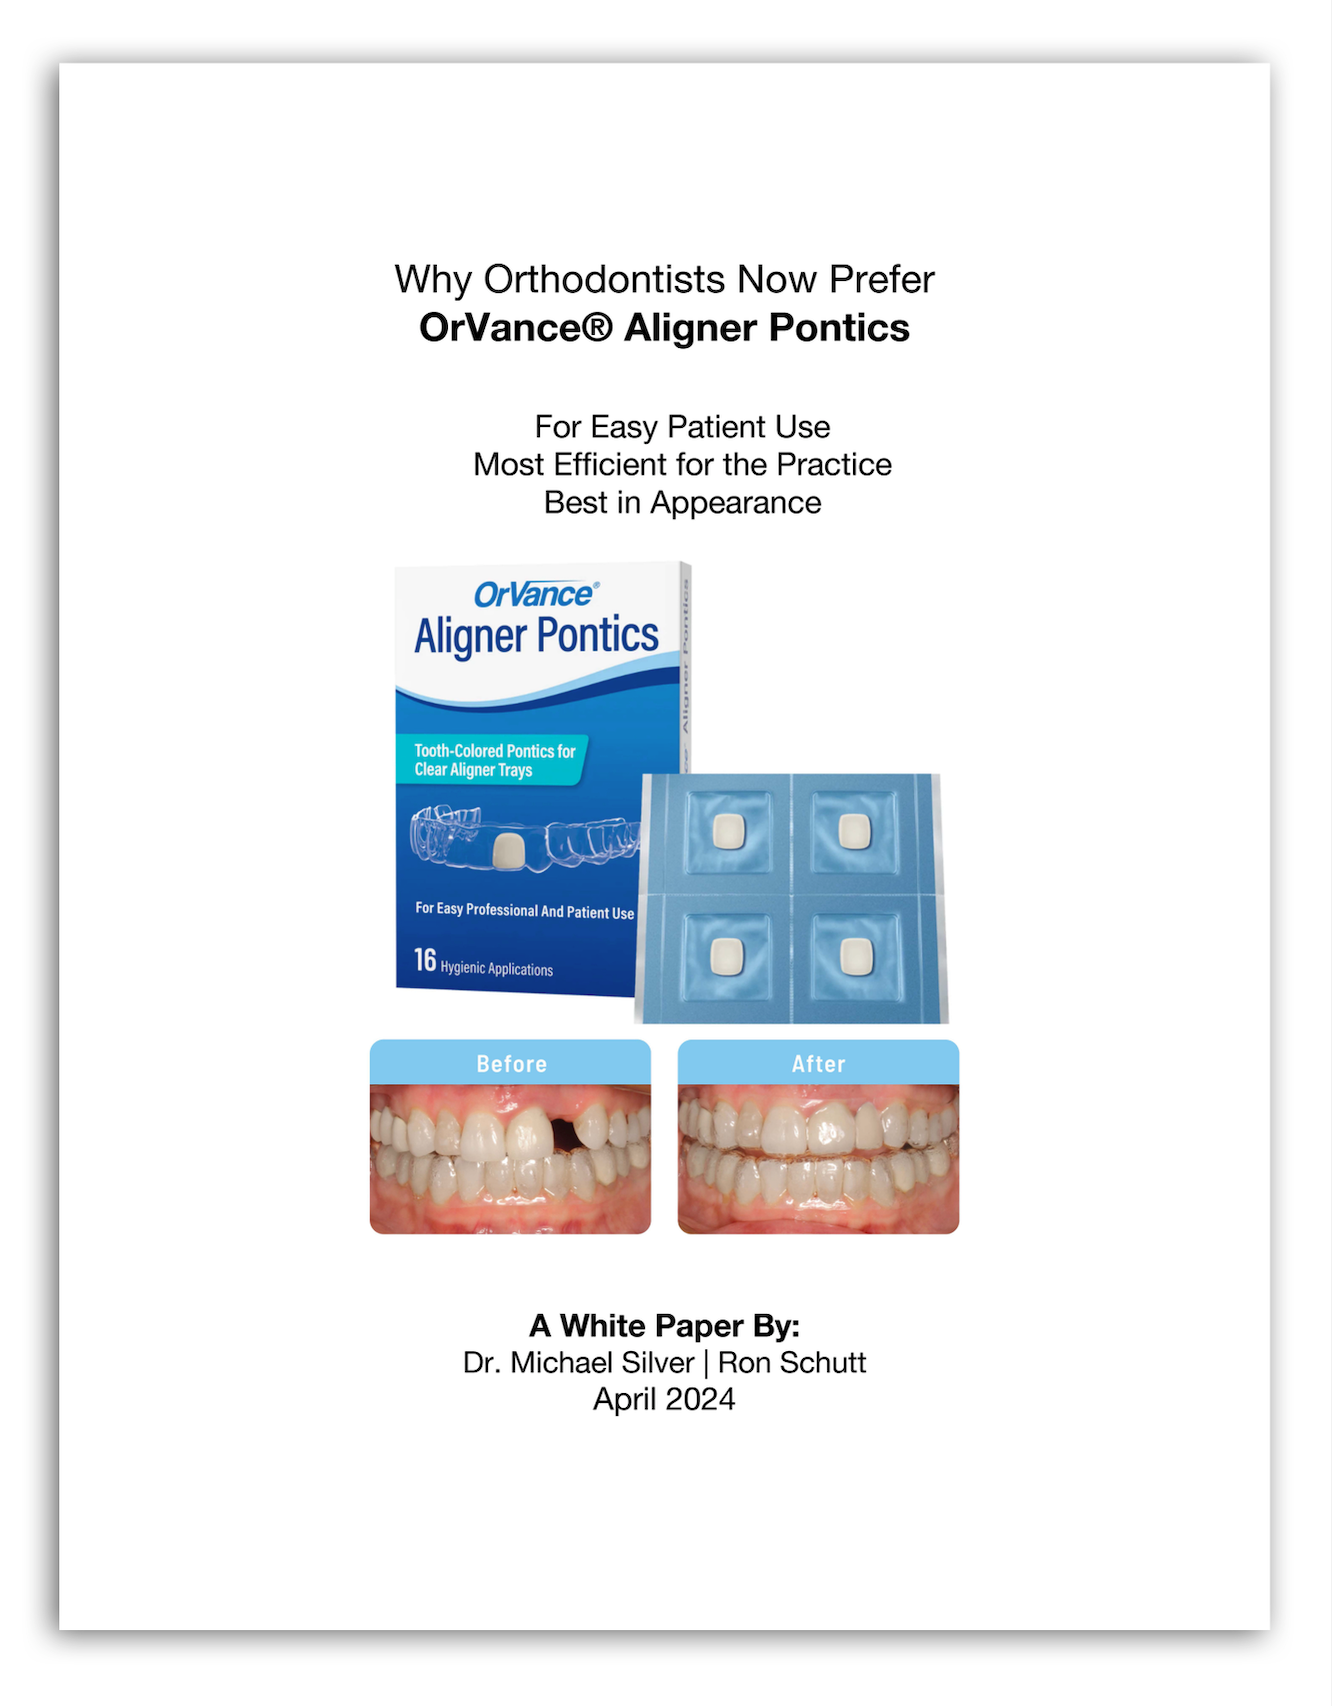 Why Orthodontists Now Prefer OrVance® Aligner Pontics